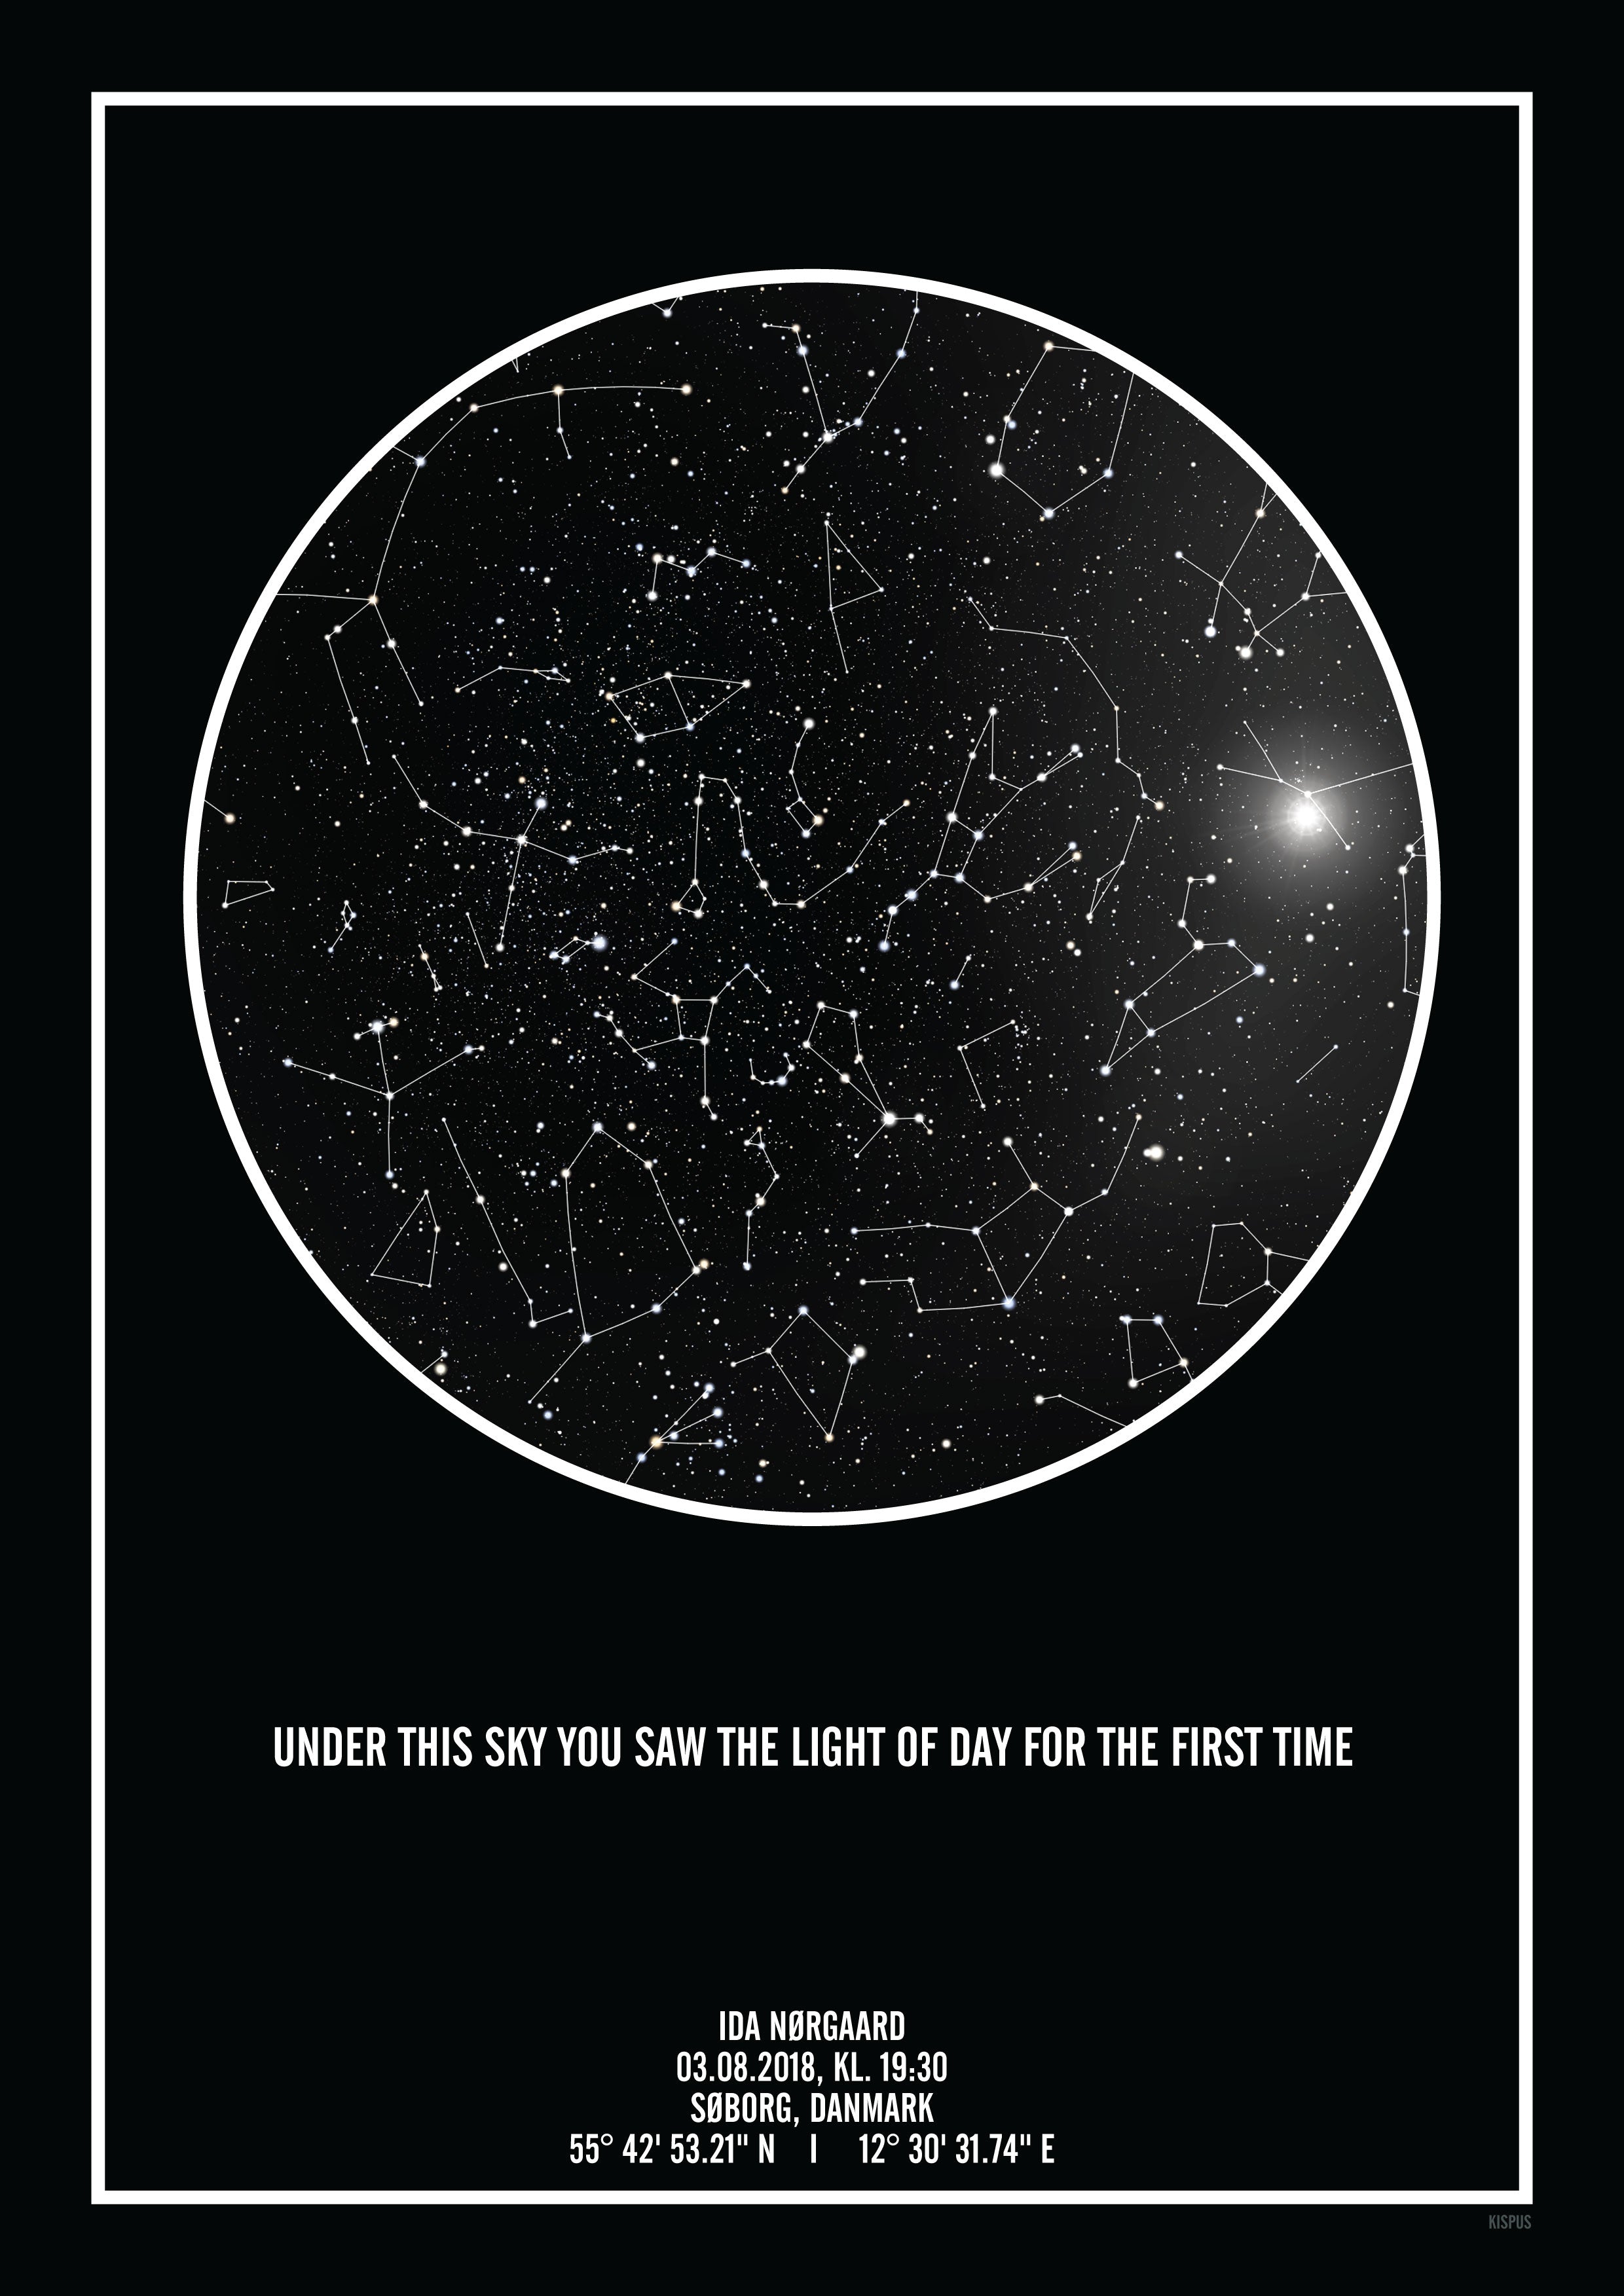 Se PERSONLIG STJERNEHIMMEL PLAKAT (SORT) - 30x40 / Stjernehimmel med stjernebilleder hos KISPUS